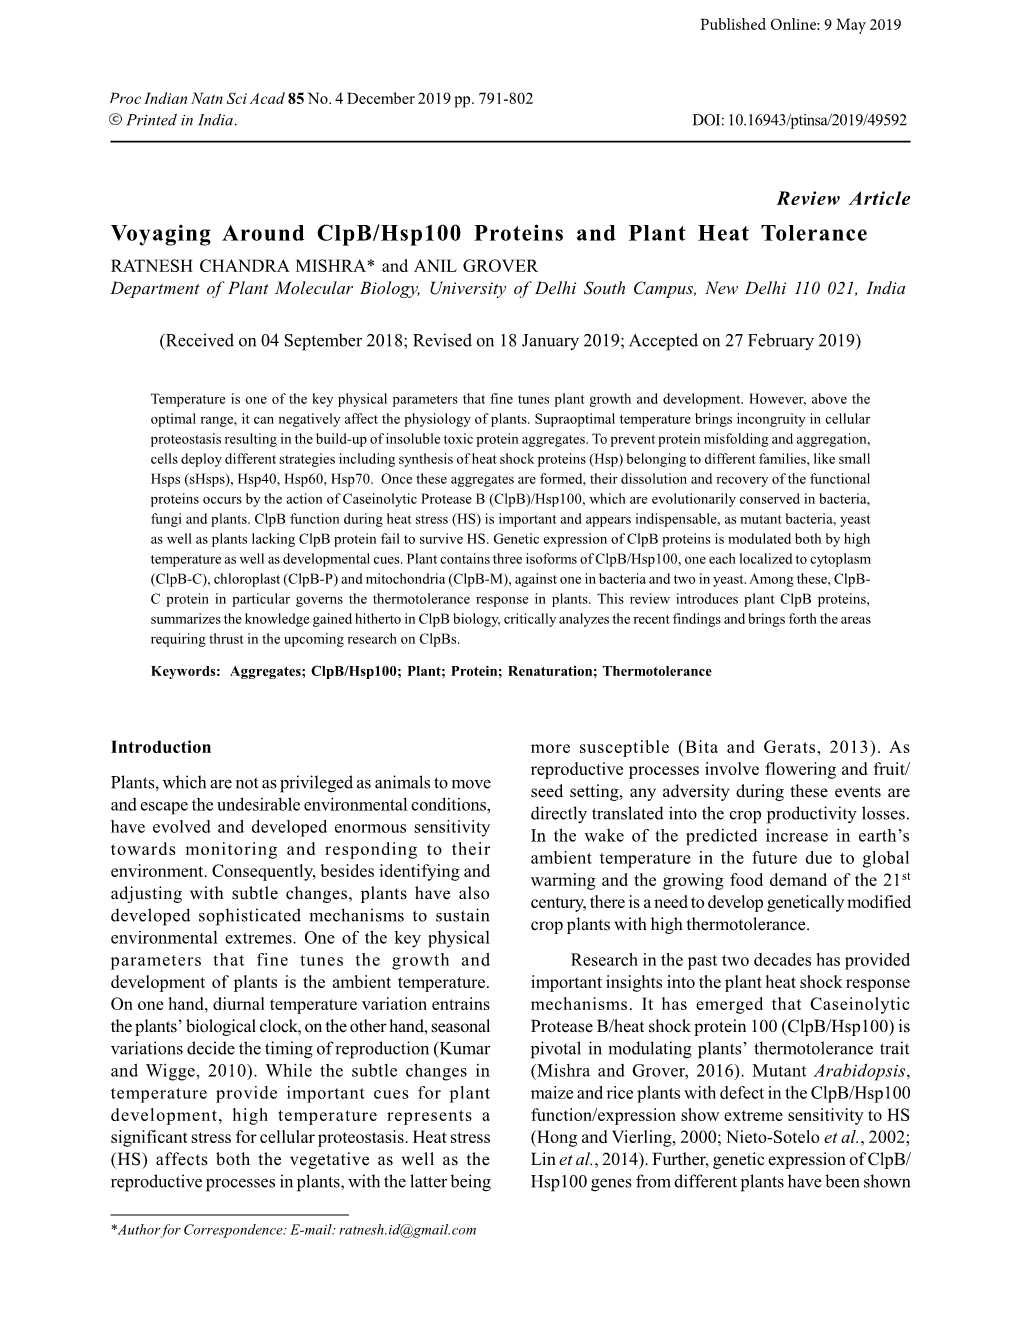 Voyaging Around Clpb/Hsp100 Proteins and Plant Heat Tolerance